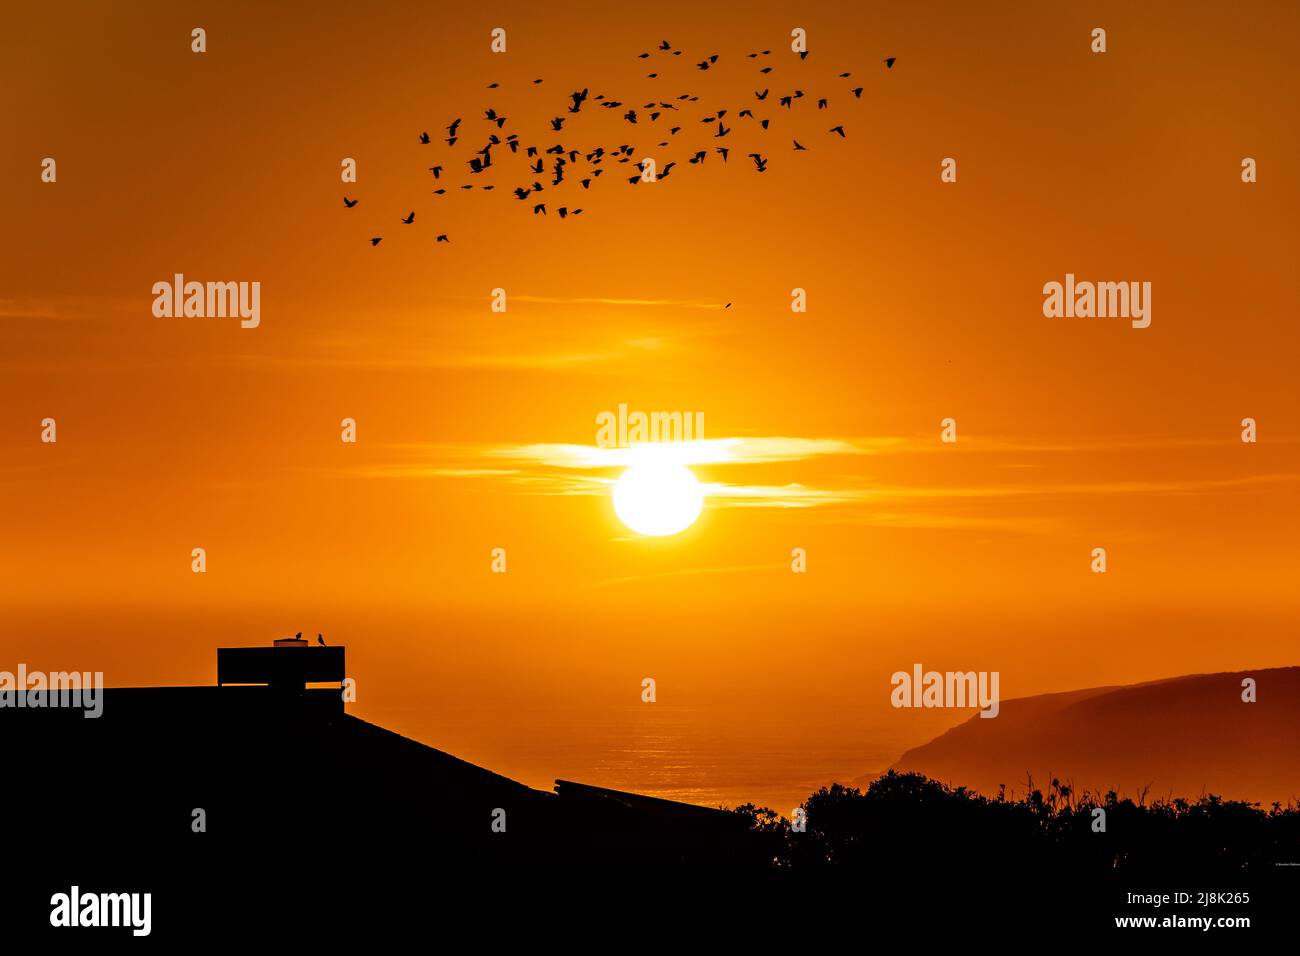 A flock of birds at peak sunsnet, carving through the orange skies along the coast of Bodega Bay, CA. Stock Photo